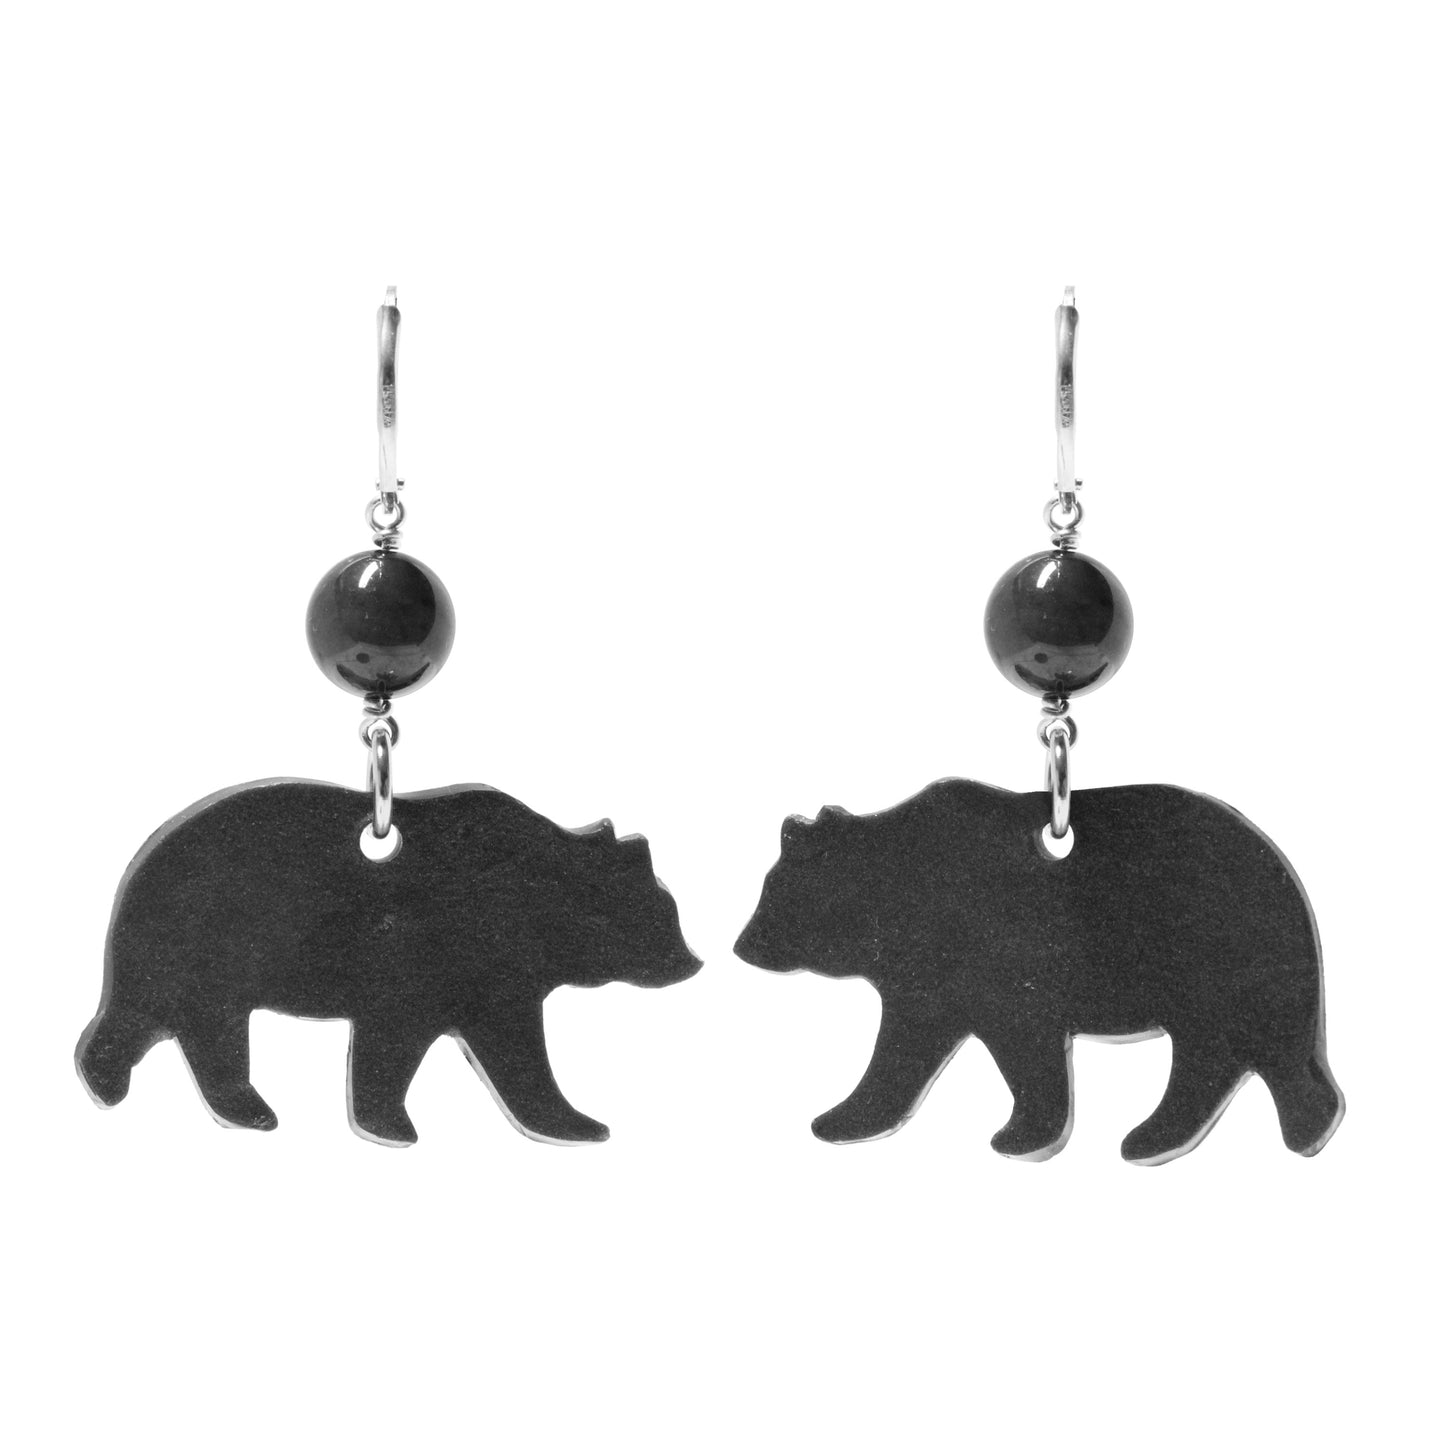 Night Forest Bear Earrings / 57mm length / black onyx gemstones / sterling silver leverbacks